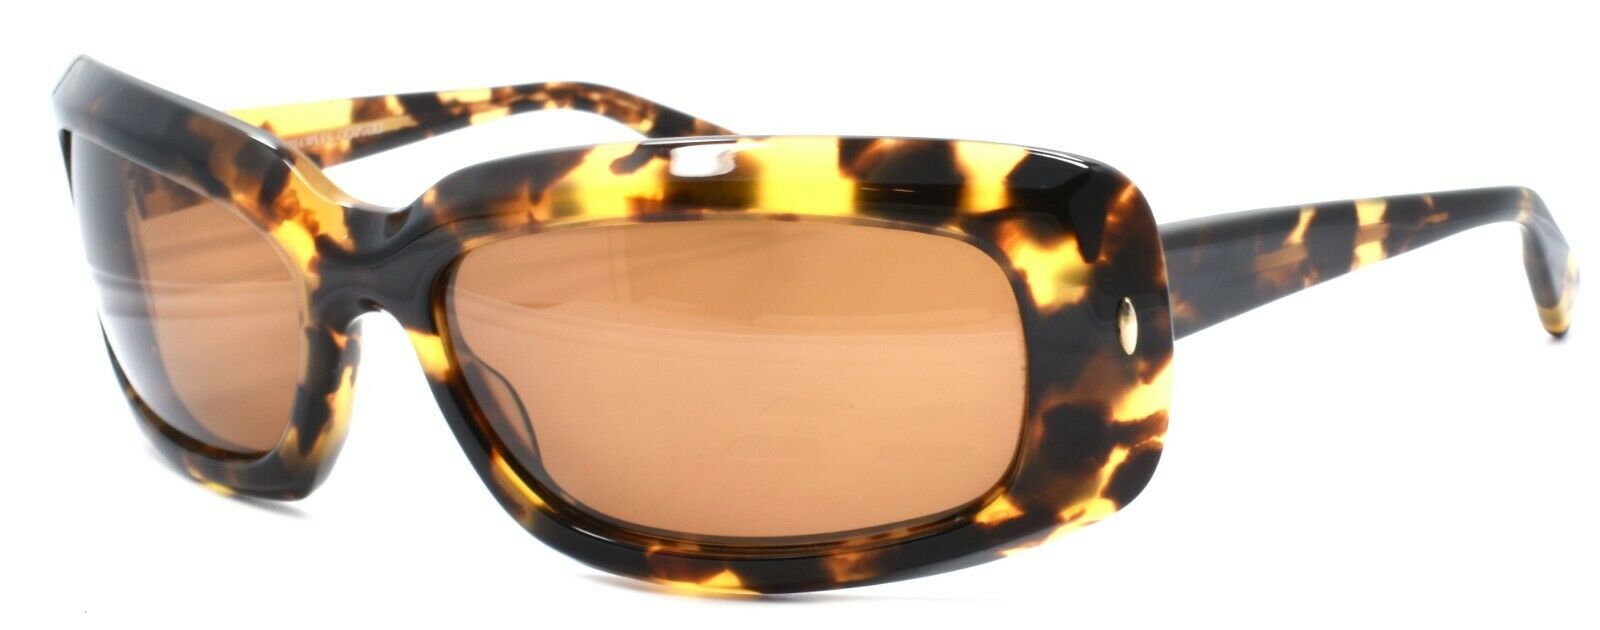 1-Oliver Peoples Ingenue DTB Women's Sunglasses Tortoise / Brown JAPAN-Does not apply-IKSpecs